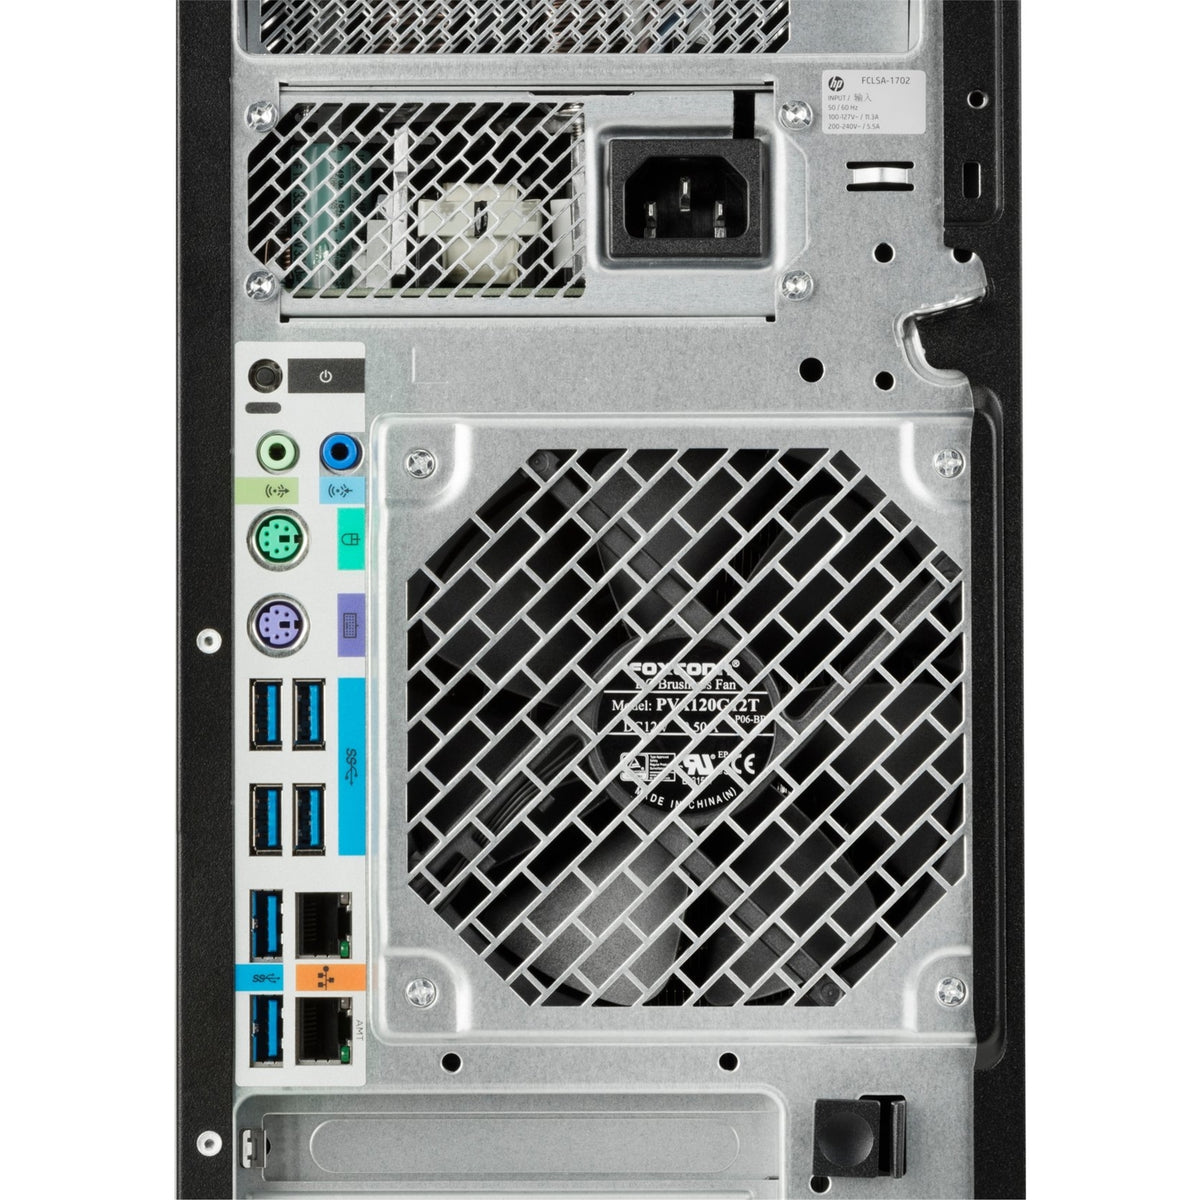 HP Workstation Z4 G4 Tower 128GB 1TB SSD Intel i7 3.6GHz Win10P, Black (Certified Refurbished)